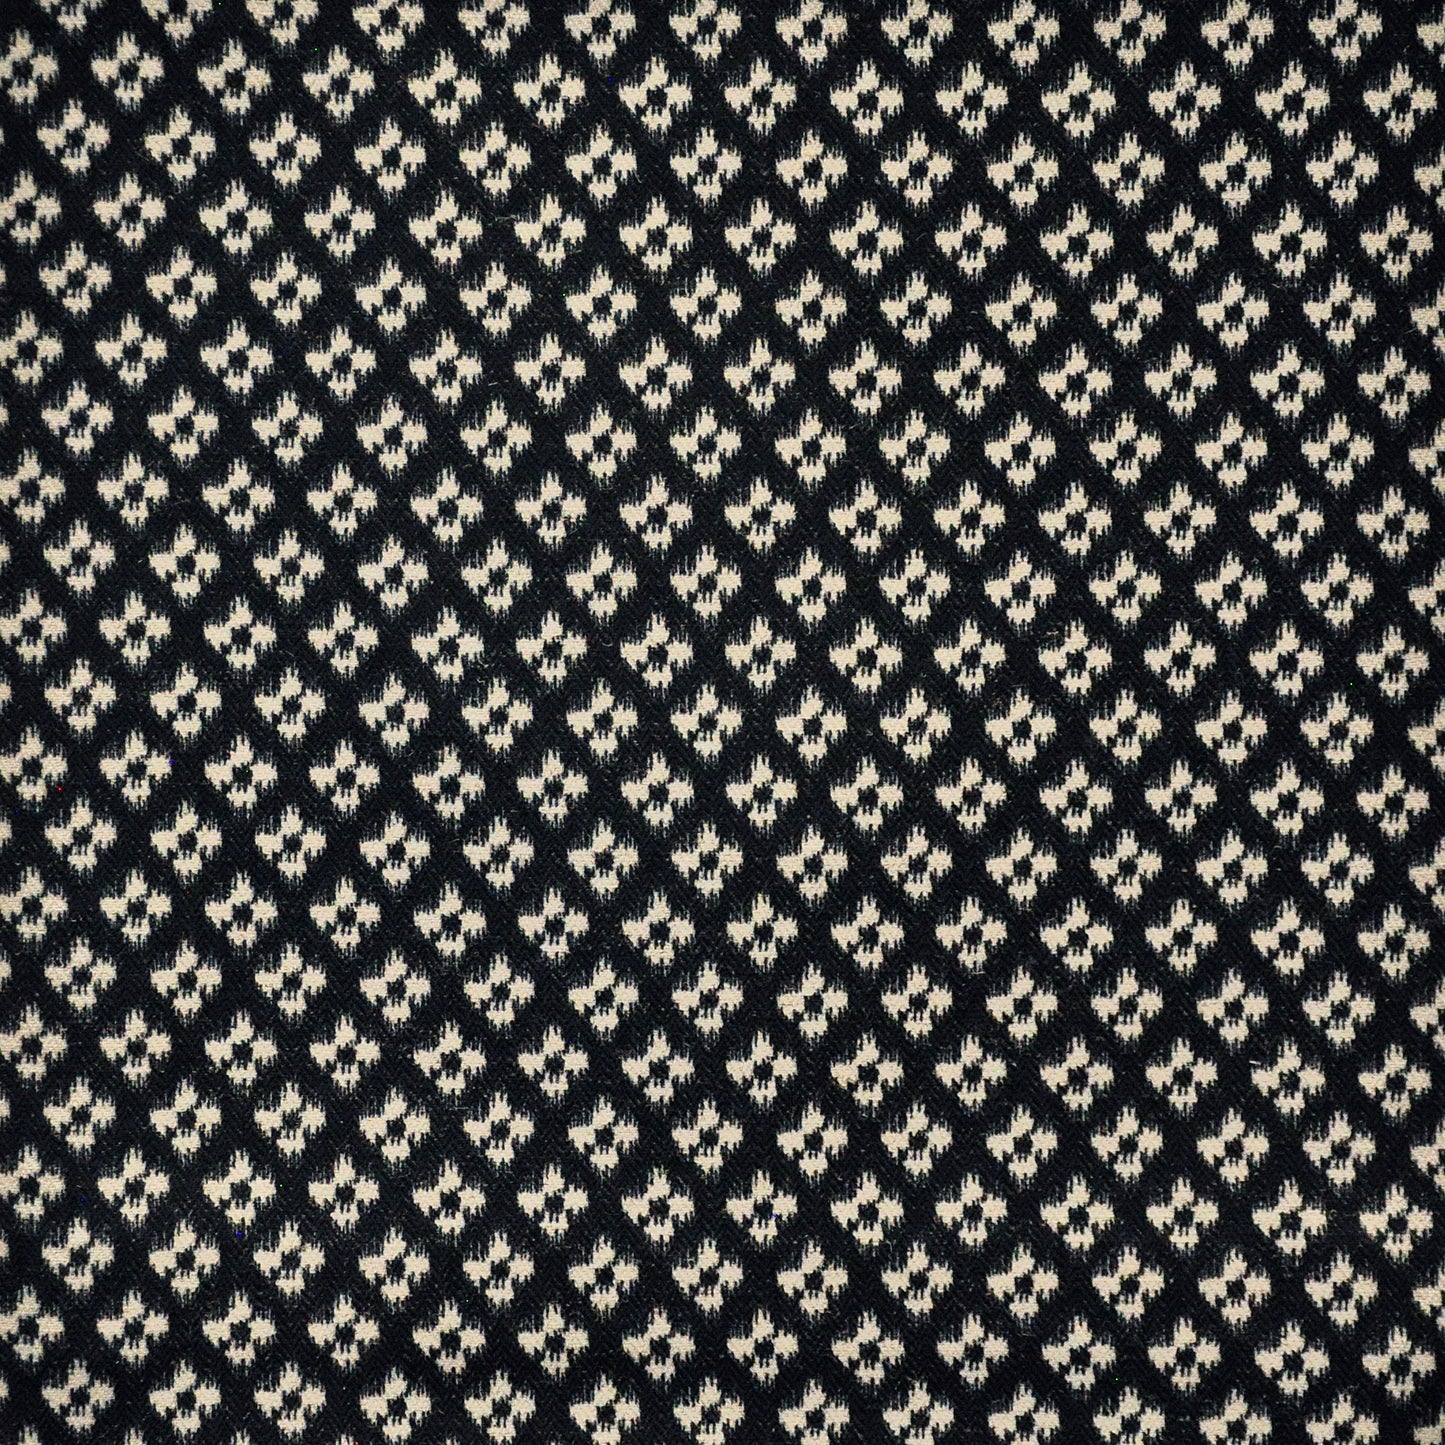 Purchase Maxwell Fabric - Marylebone, # 633 Blackbird